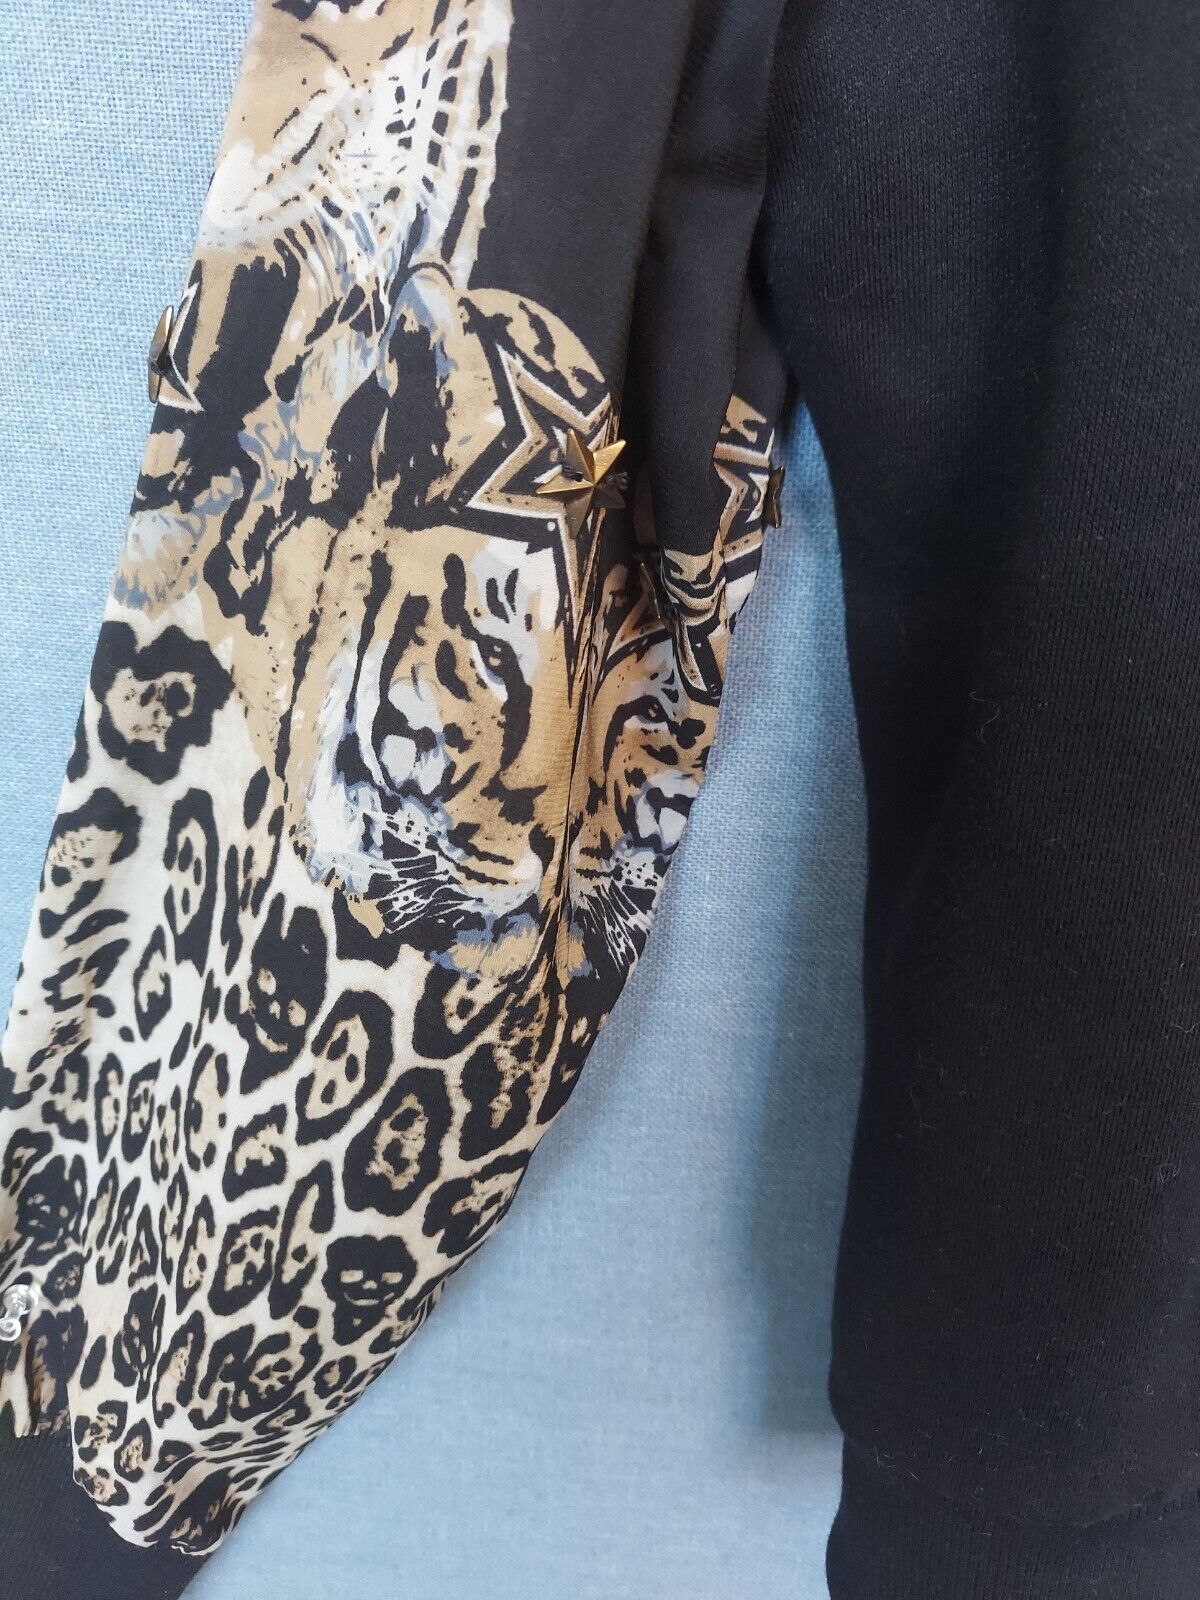 Womens Black Tiger Print Sweatshirt Top size Small - image 2